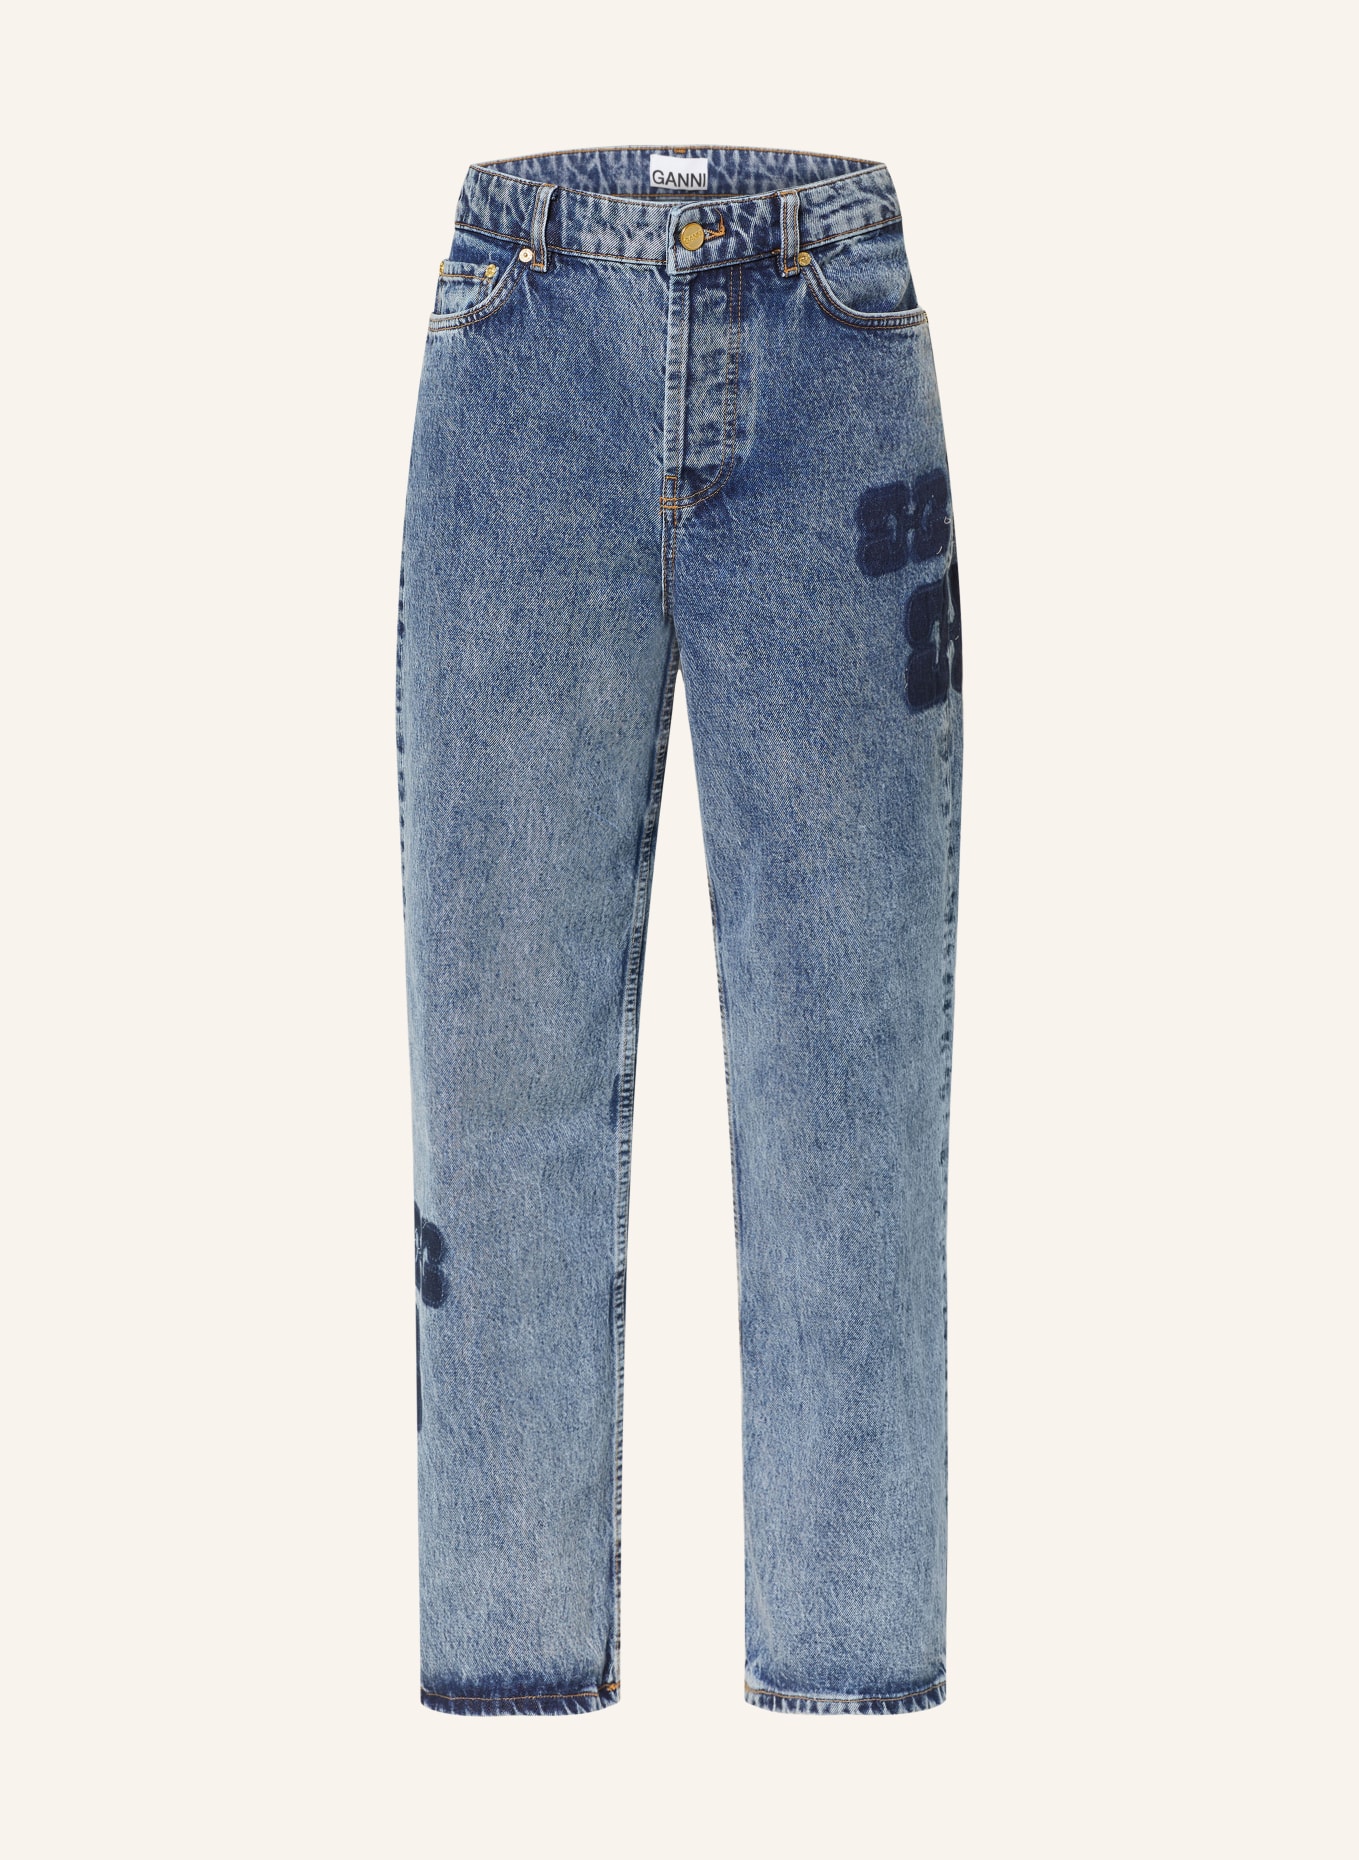 GANNI Straight Jeans IZEY, Farbe: 566 MID BLUE STONE (Bild 1)